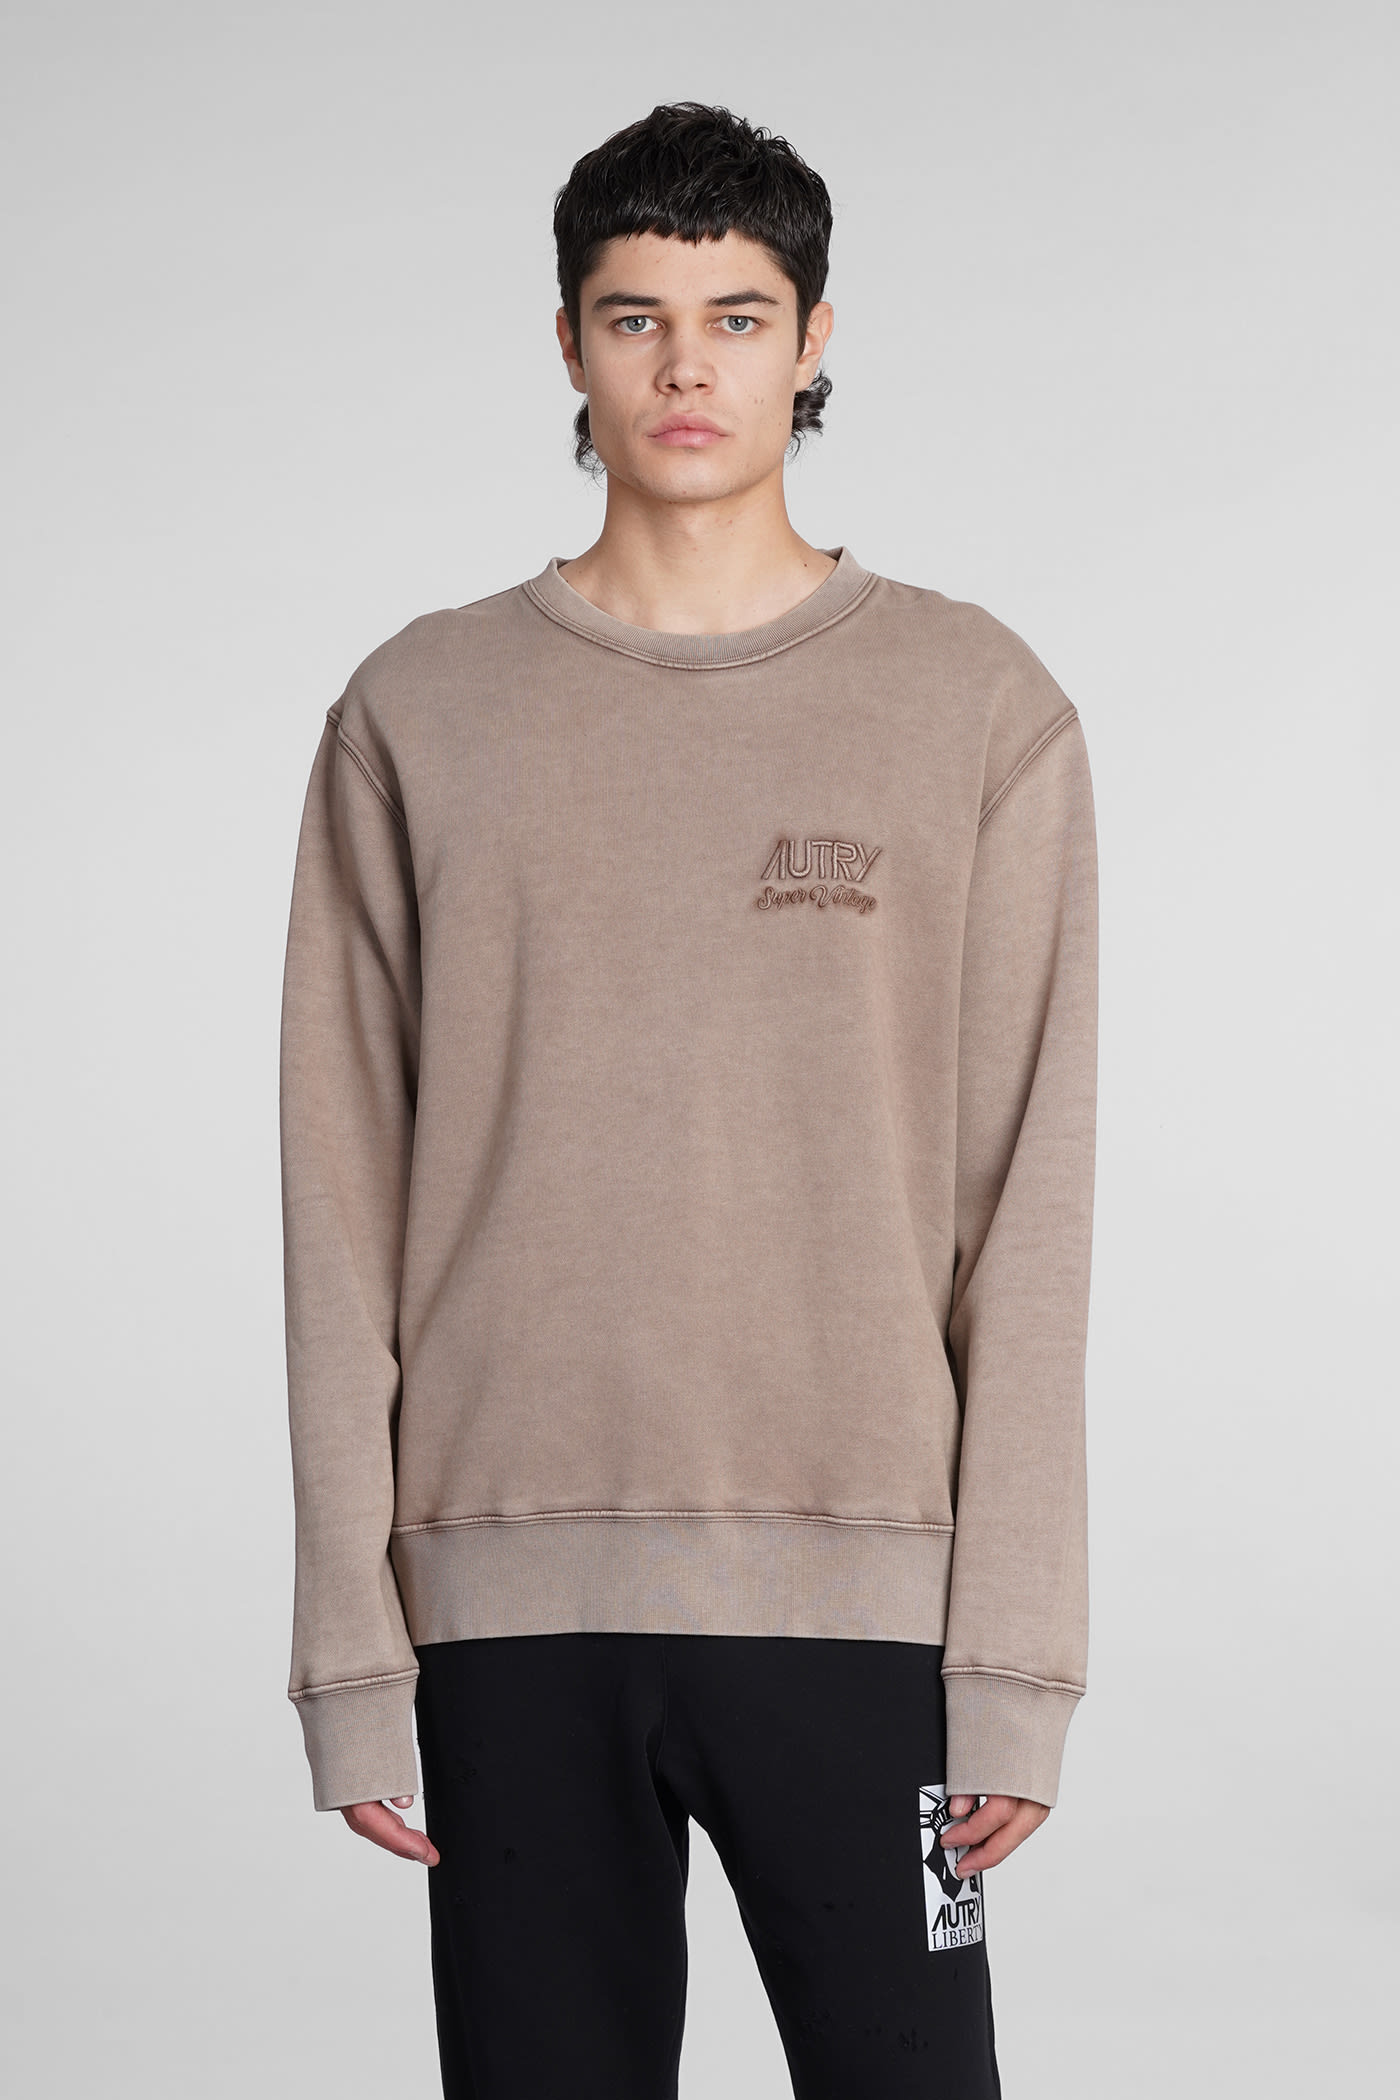 Autry Sweatshirt In Brown Cotton